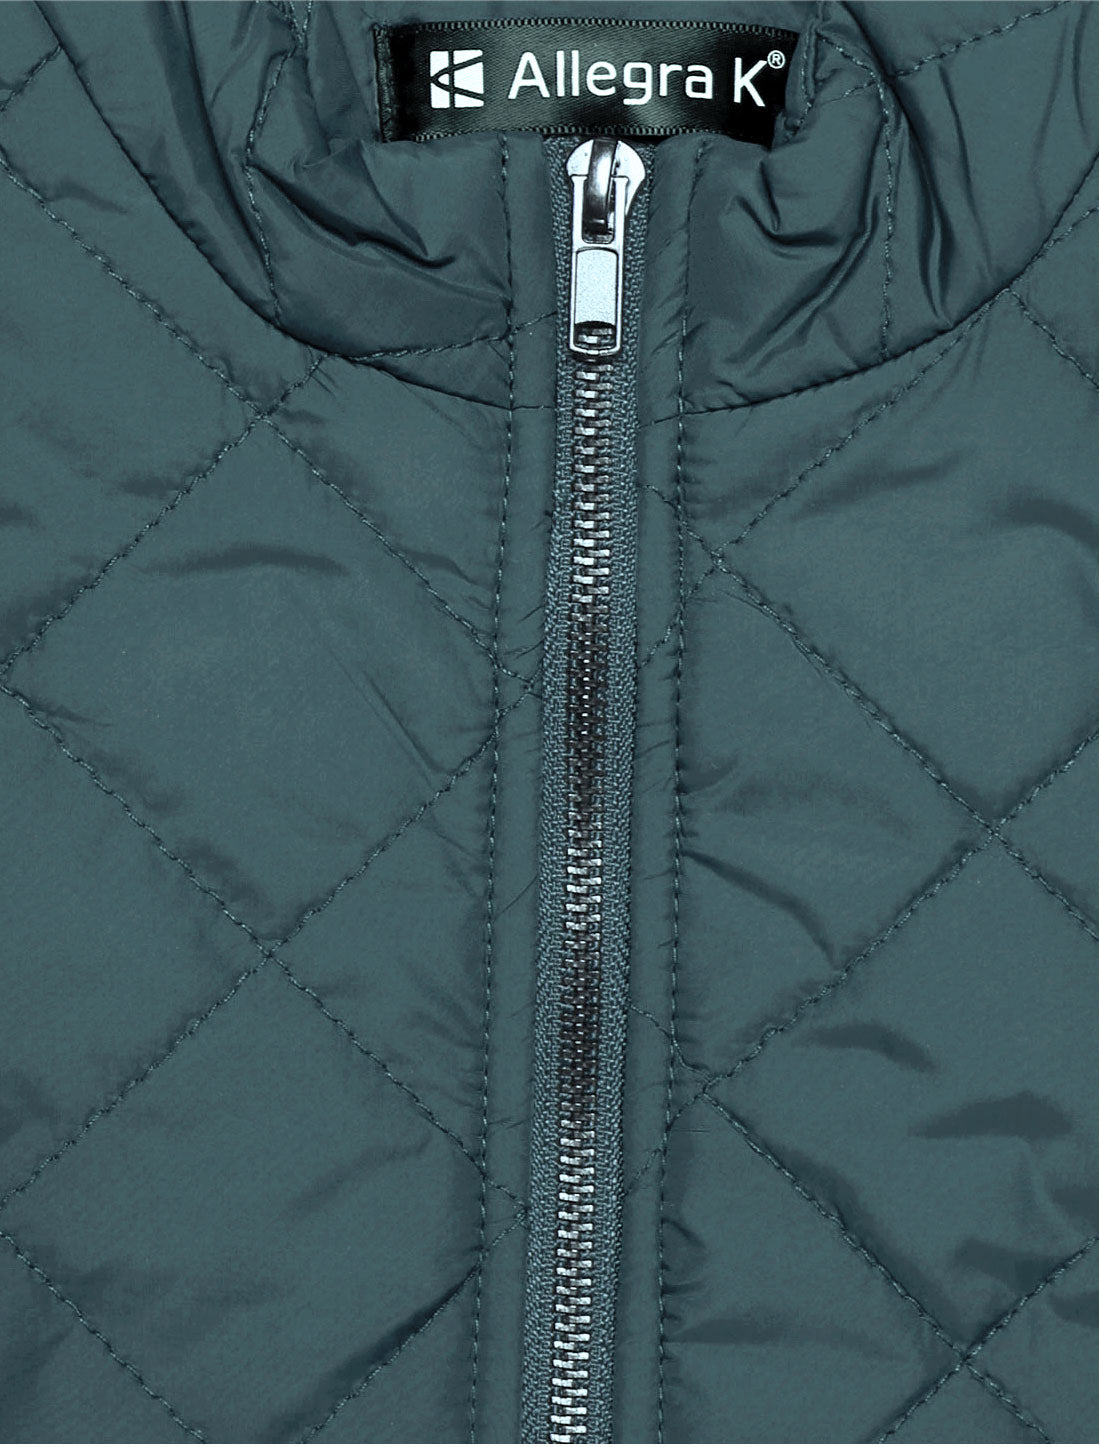 Allegra K Stand Collar Lightweight Gilet Quilted Zipper Vest